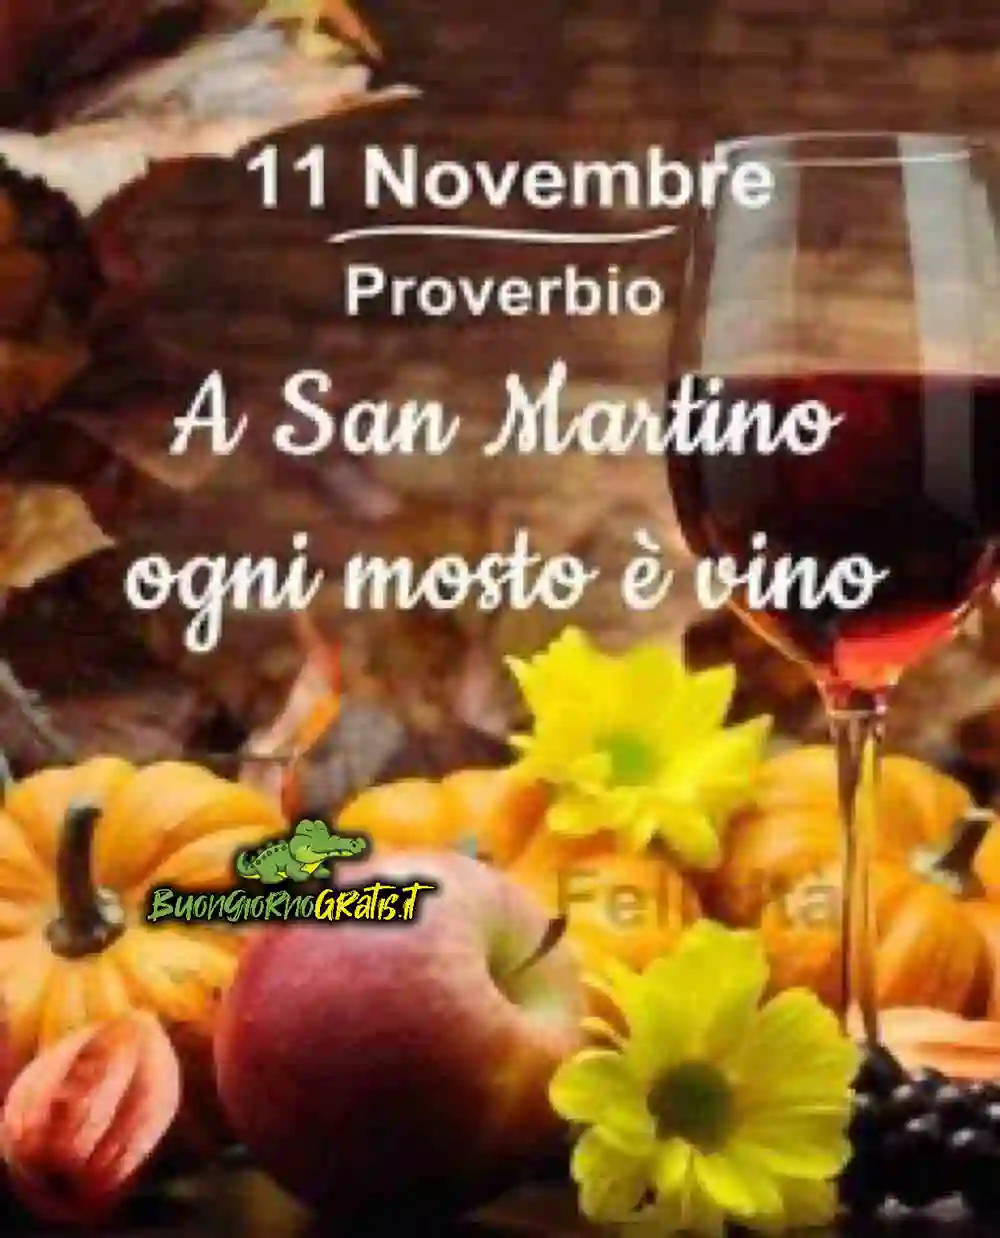 San Martino Novembre